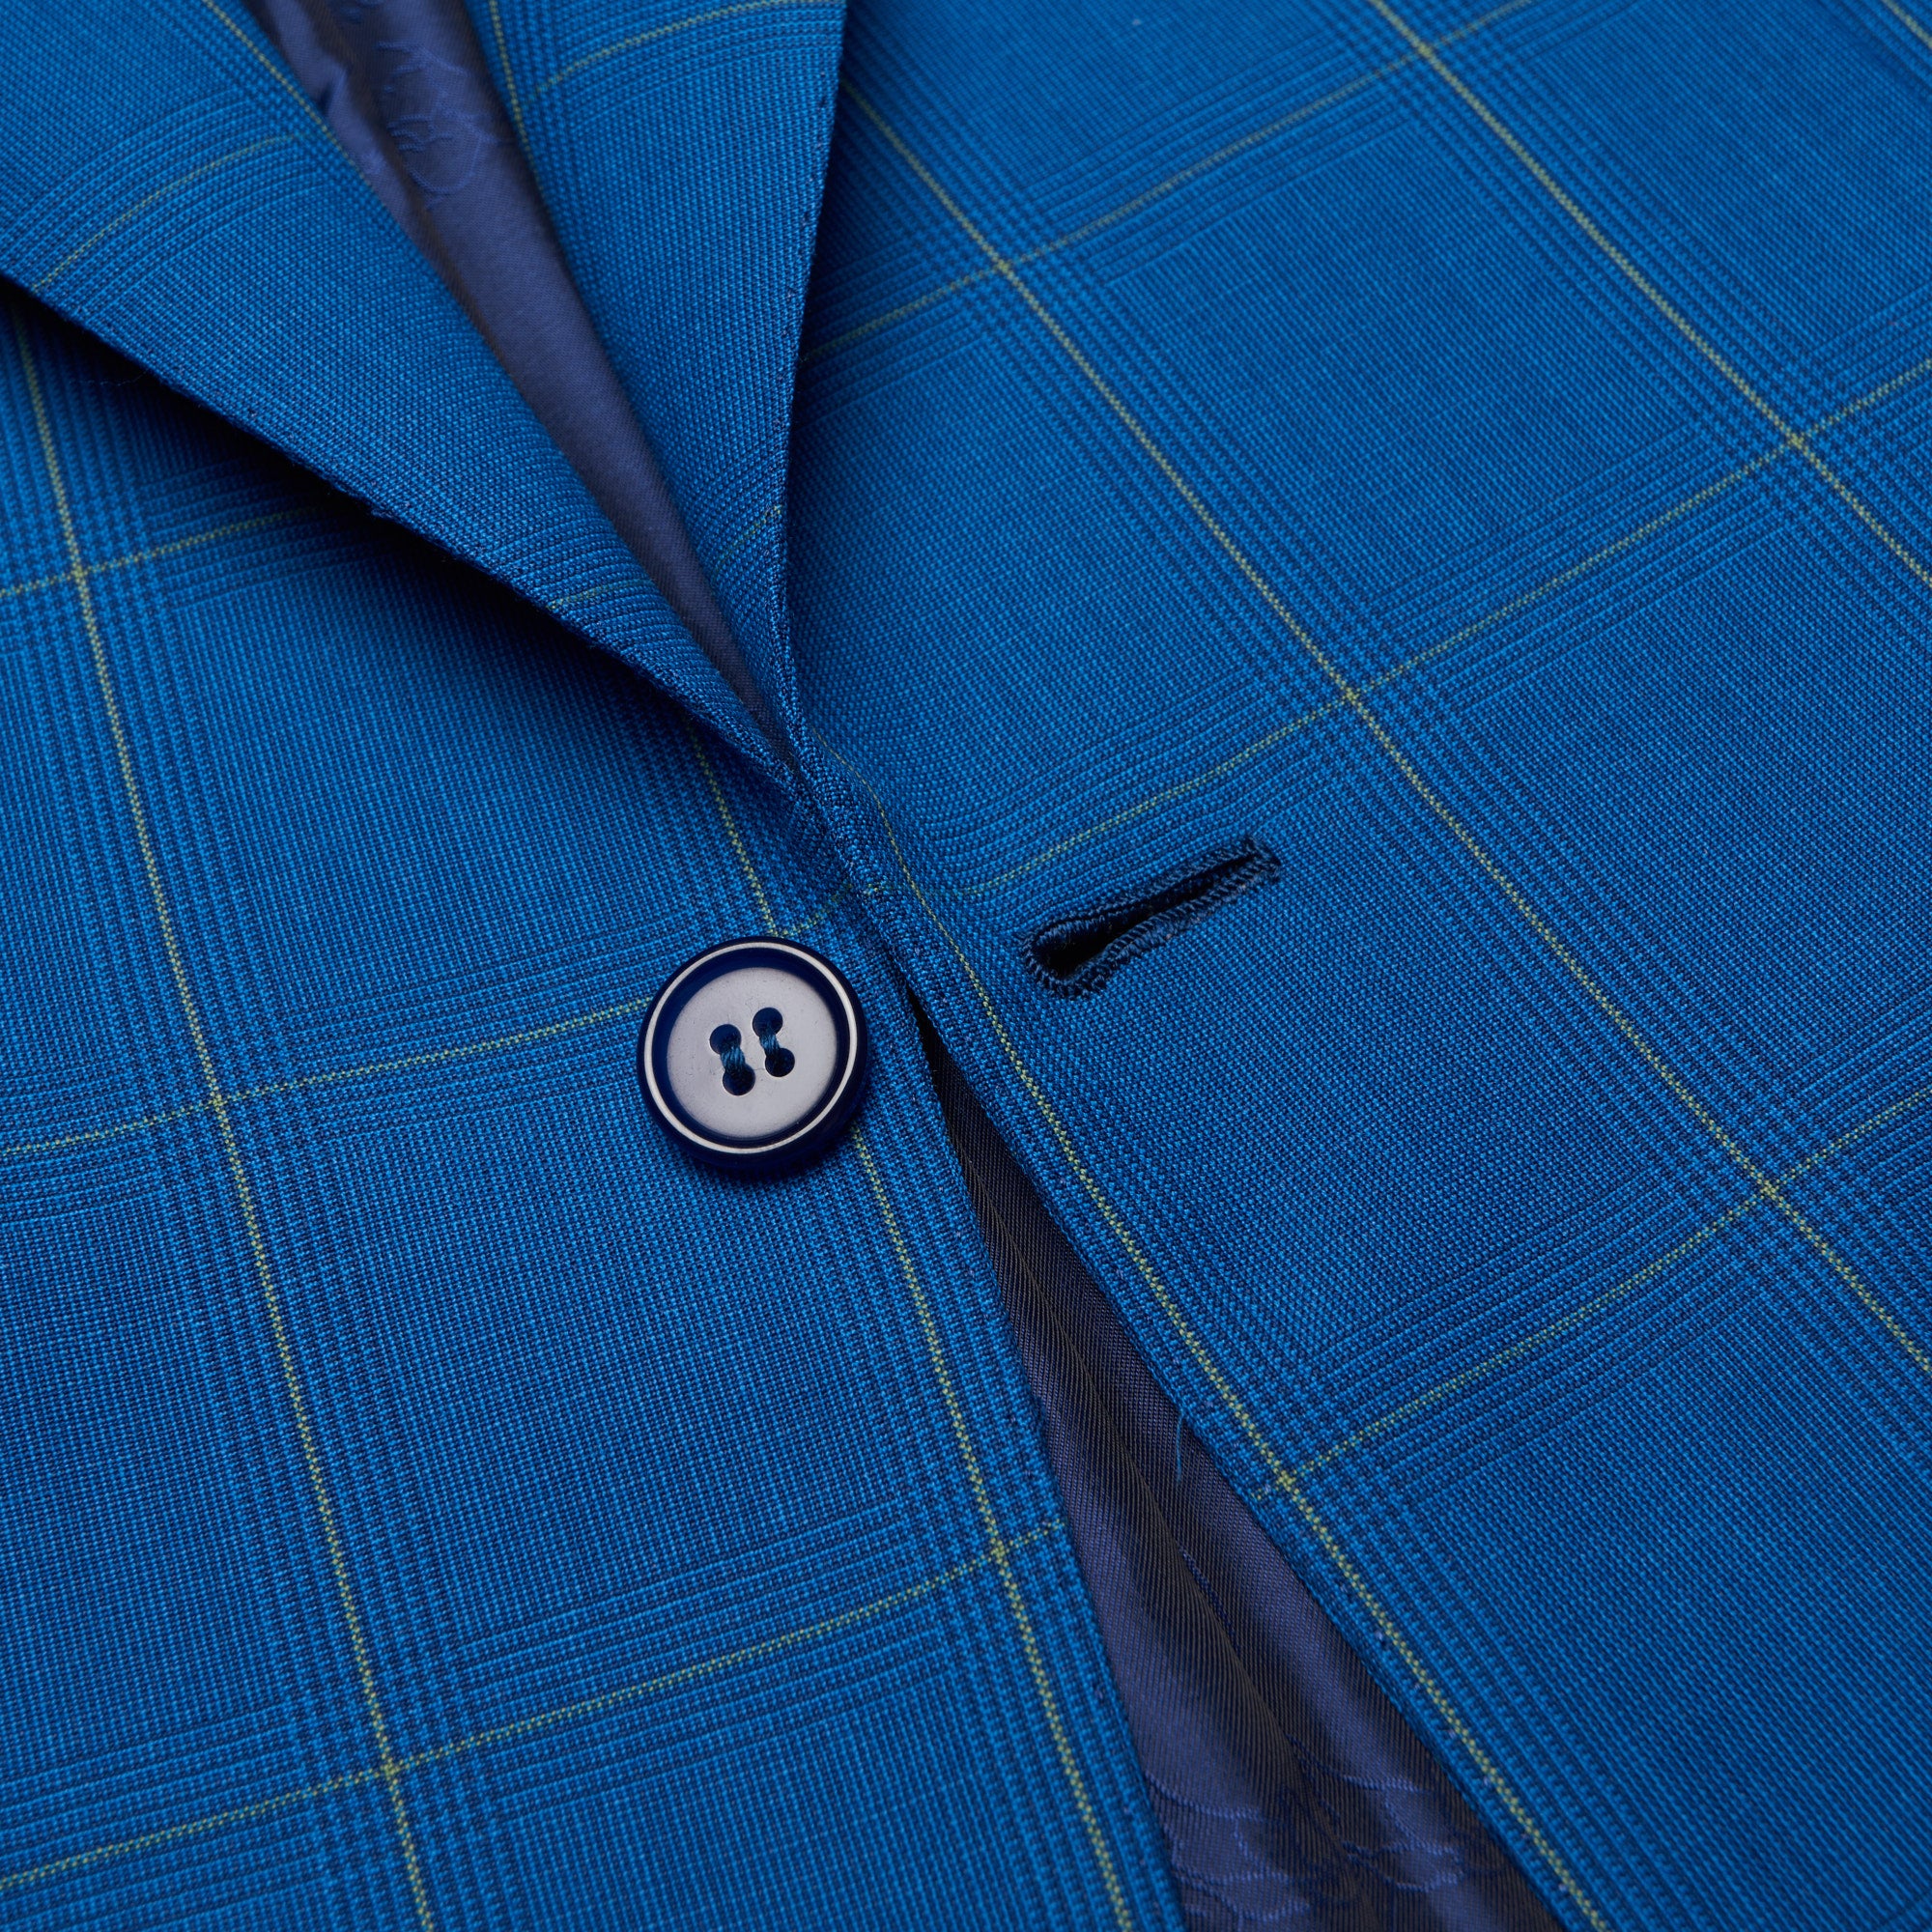 BRIONI "COLONNA" Handmade Blue Plaid Wool Jacket EU 50 NEW US 40 Long Fit